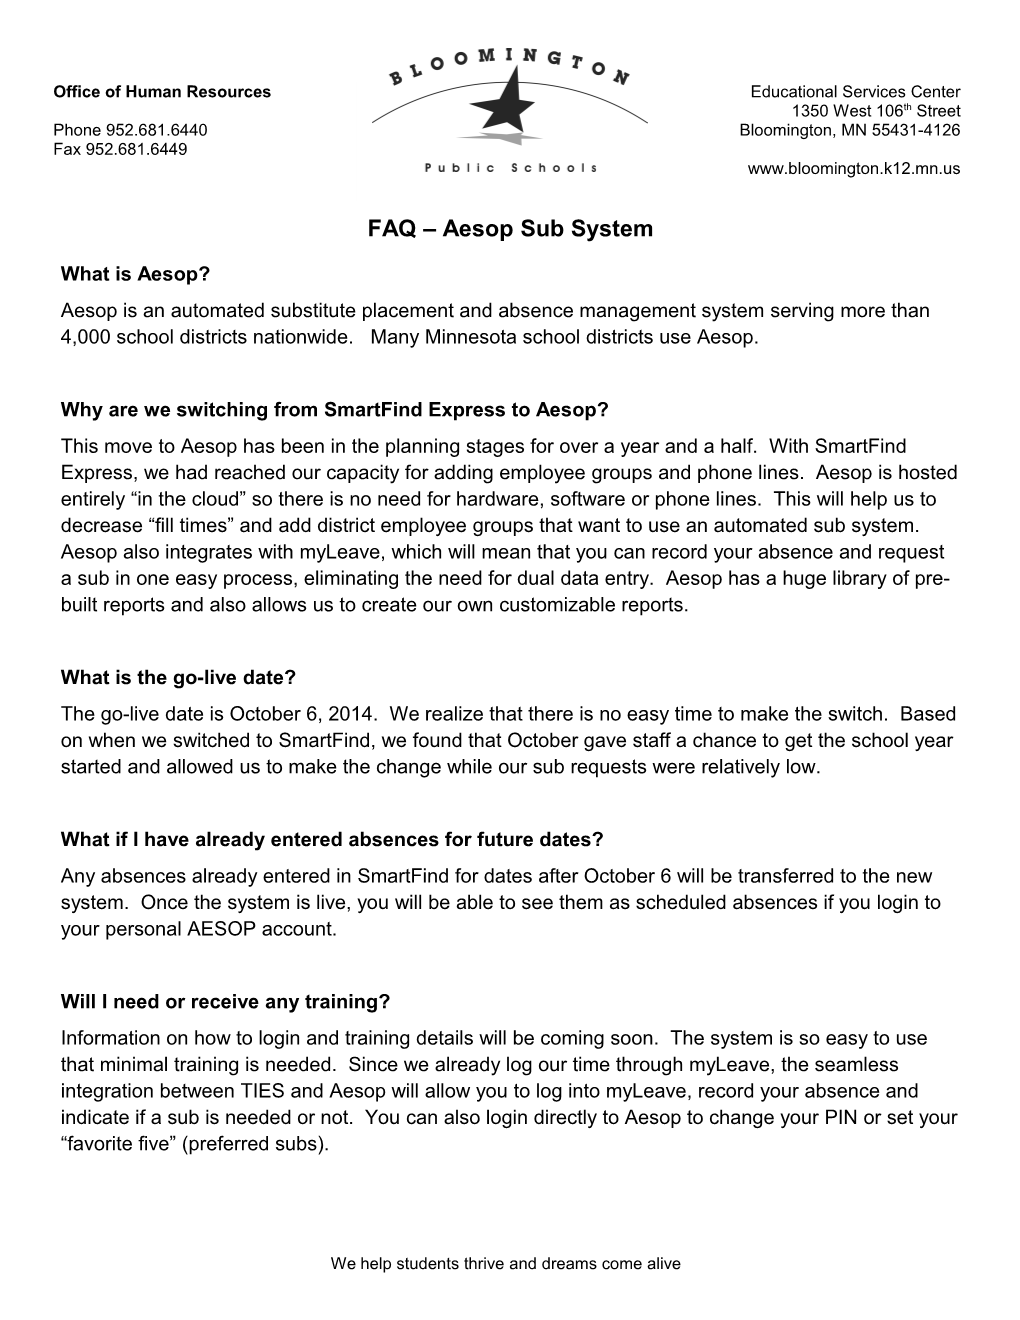 FAQ Aesop Sub System